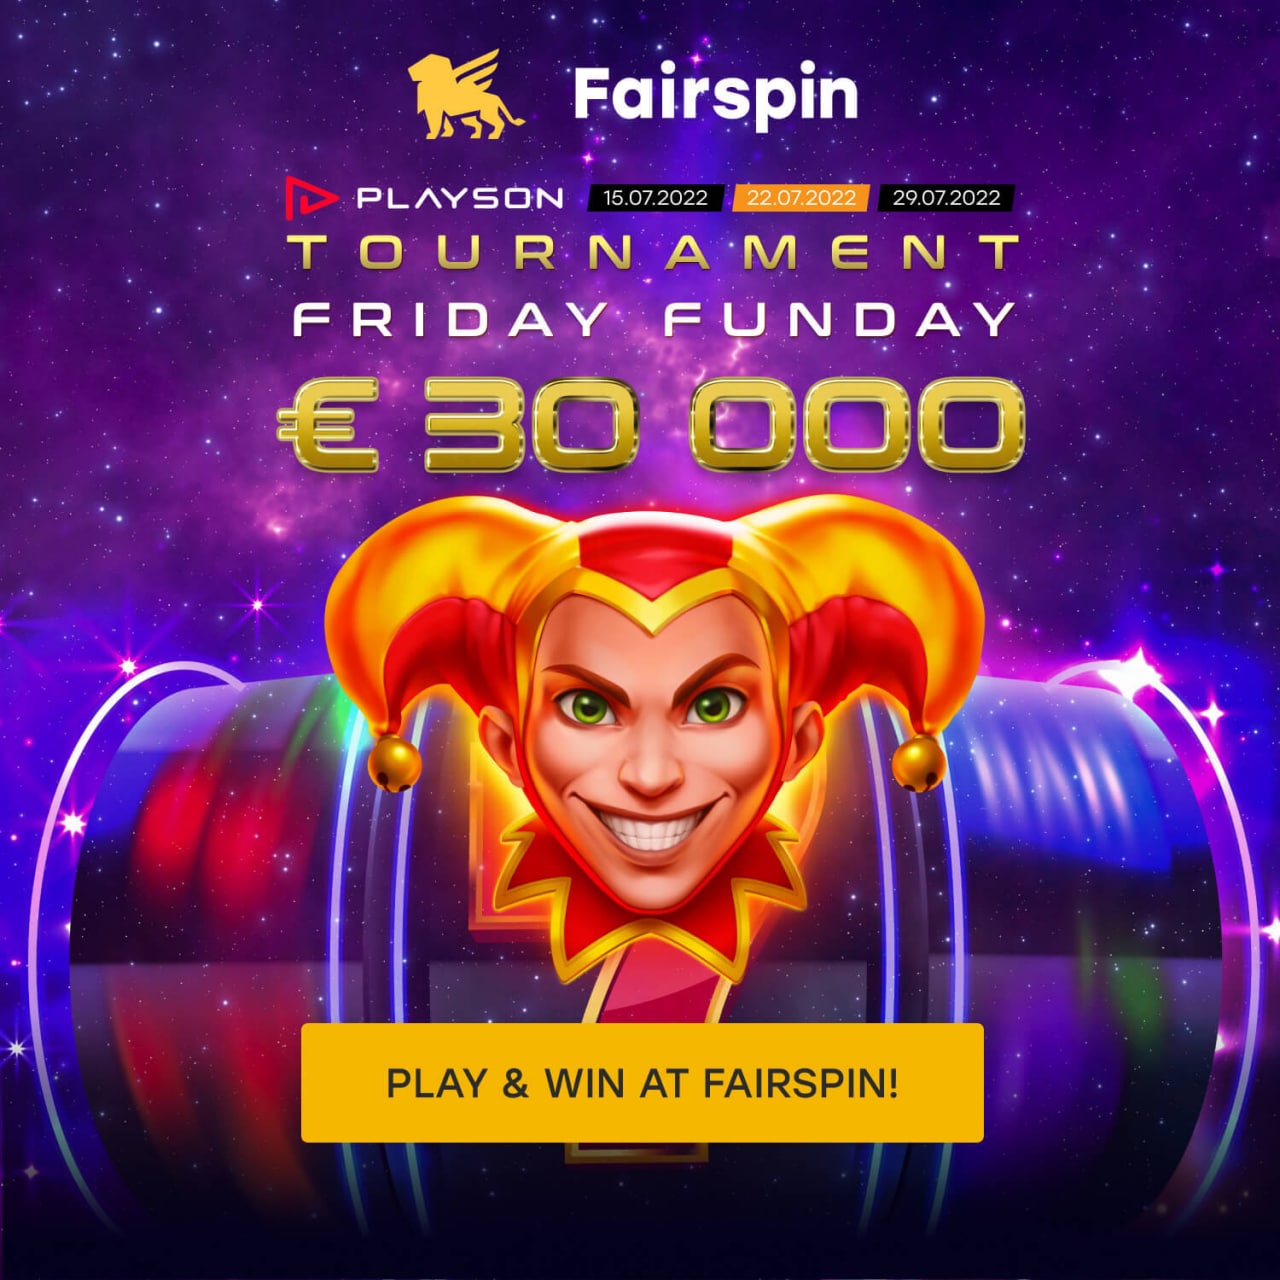 Fairspin casino фриспины fairspin plp. Playson Tournament.